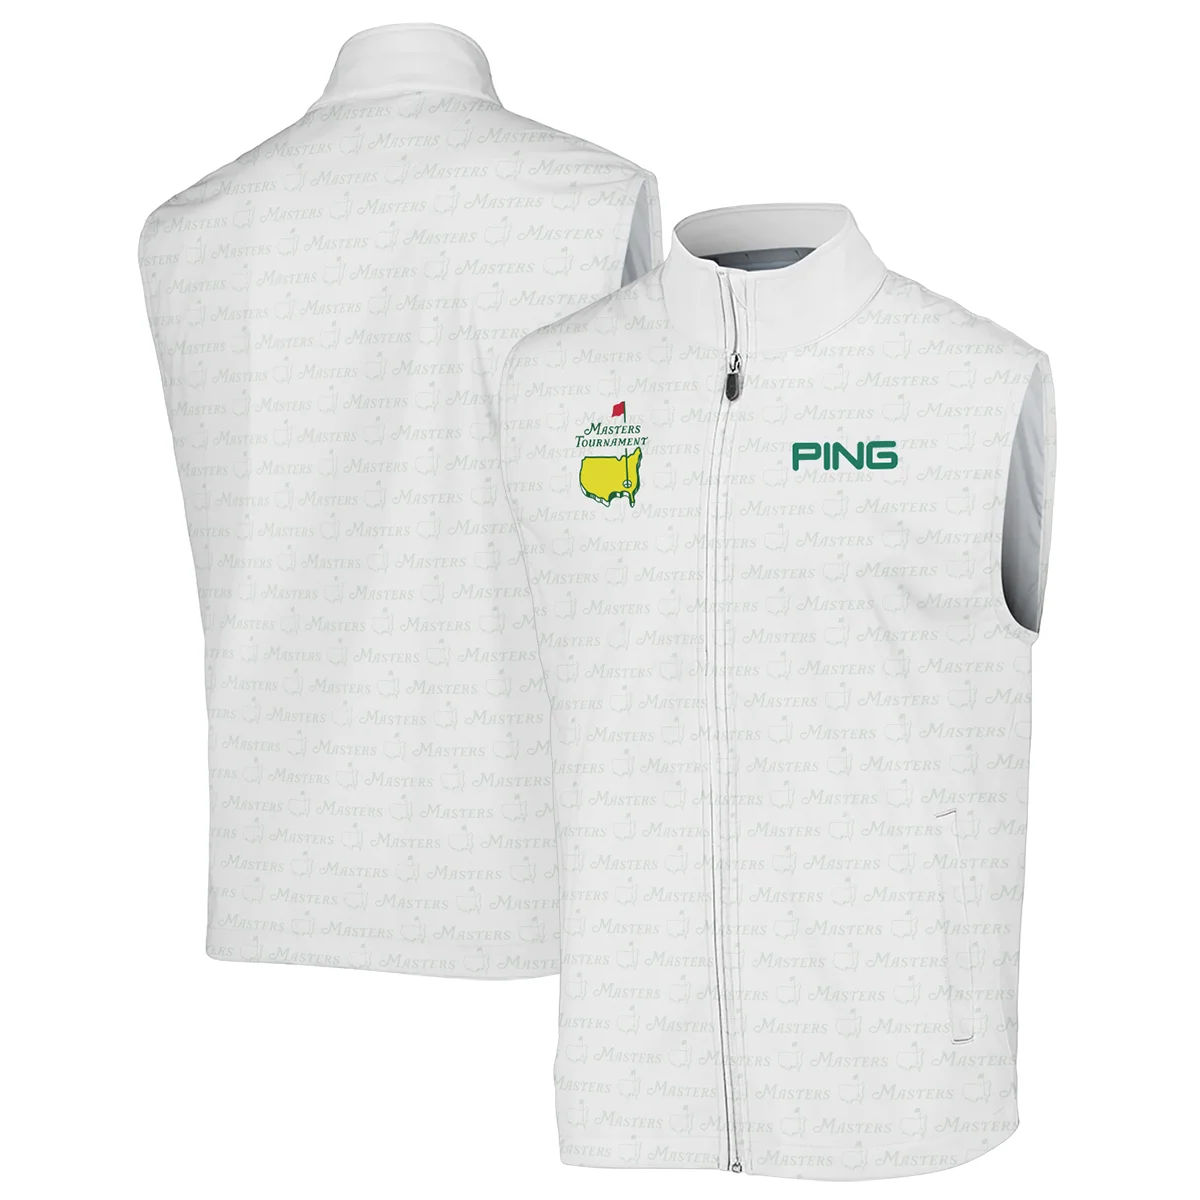 Pattern Masters Tournament Ping Unisex T-Shirt White Green Sport Love Clothing T-Shirt